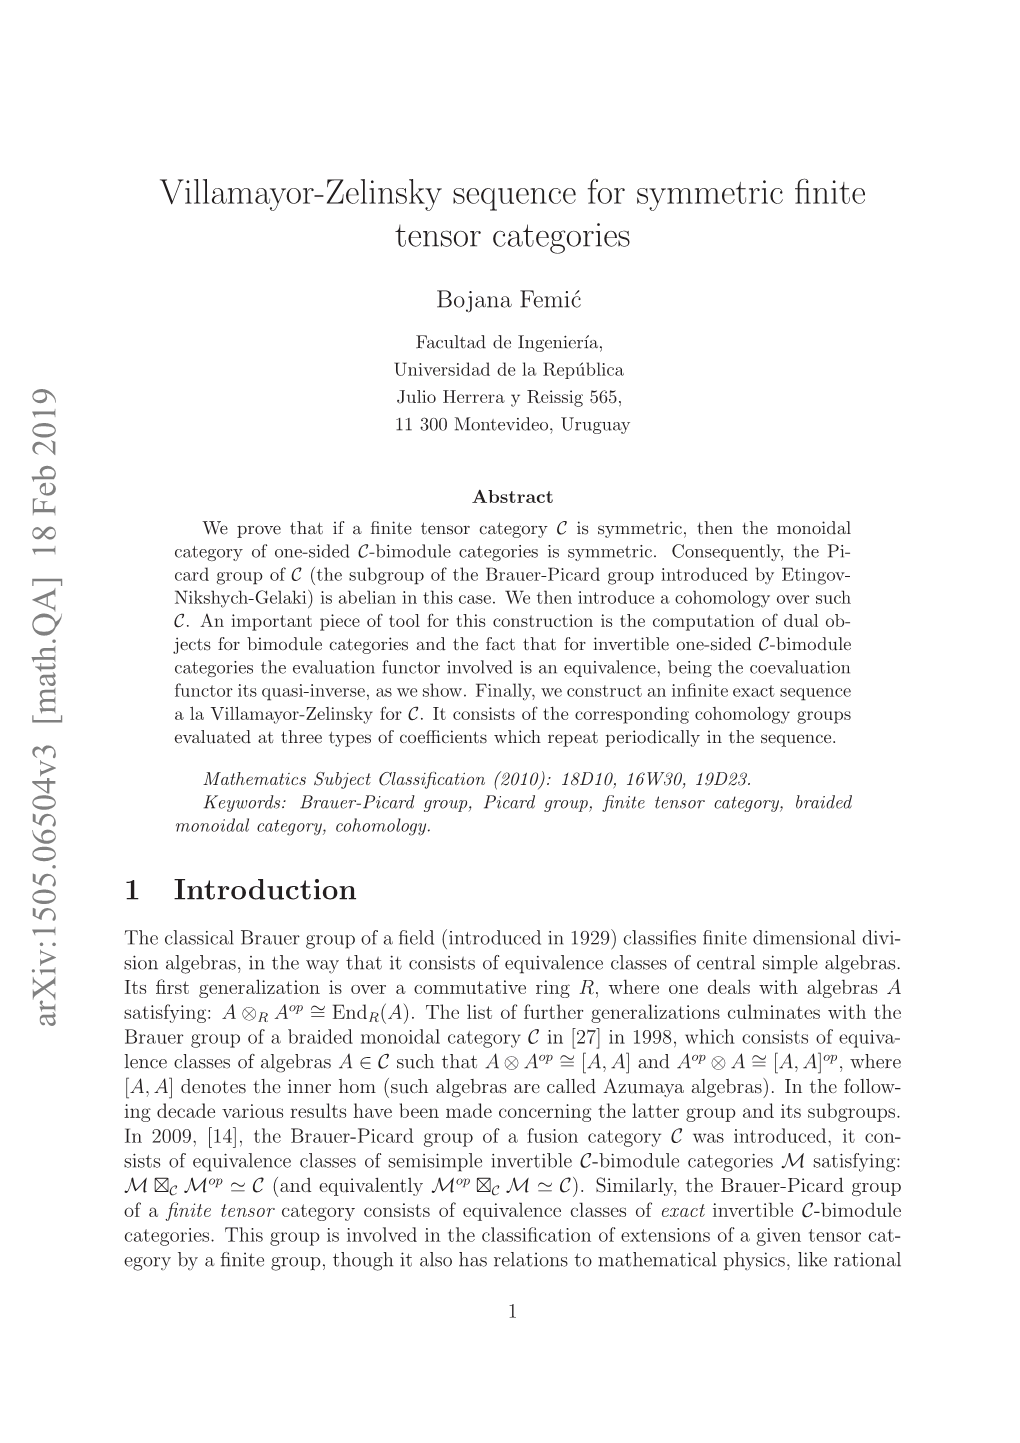 Villamayor-Zelinsky Sequence for Symmetric Finite Tensor Categories